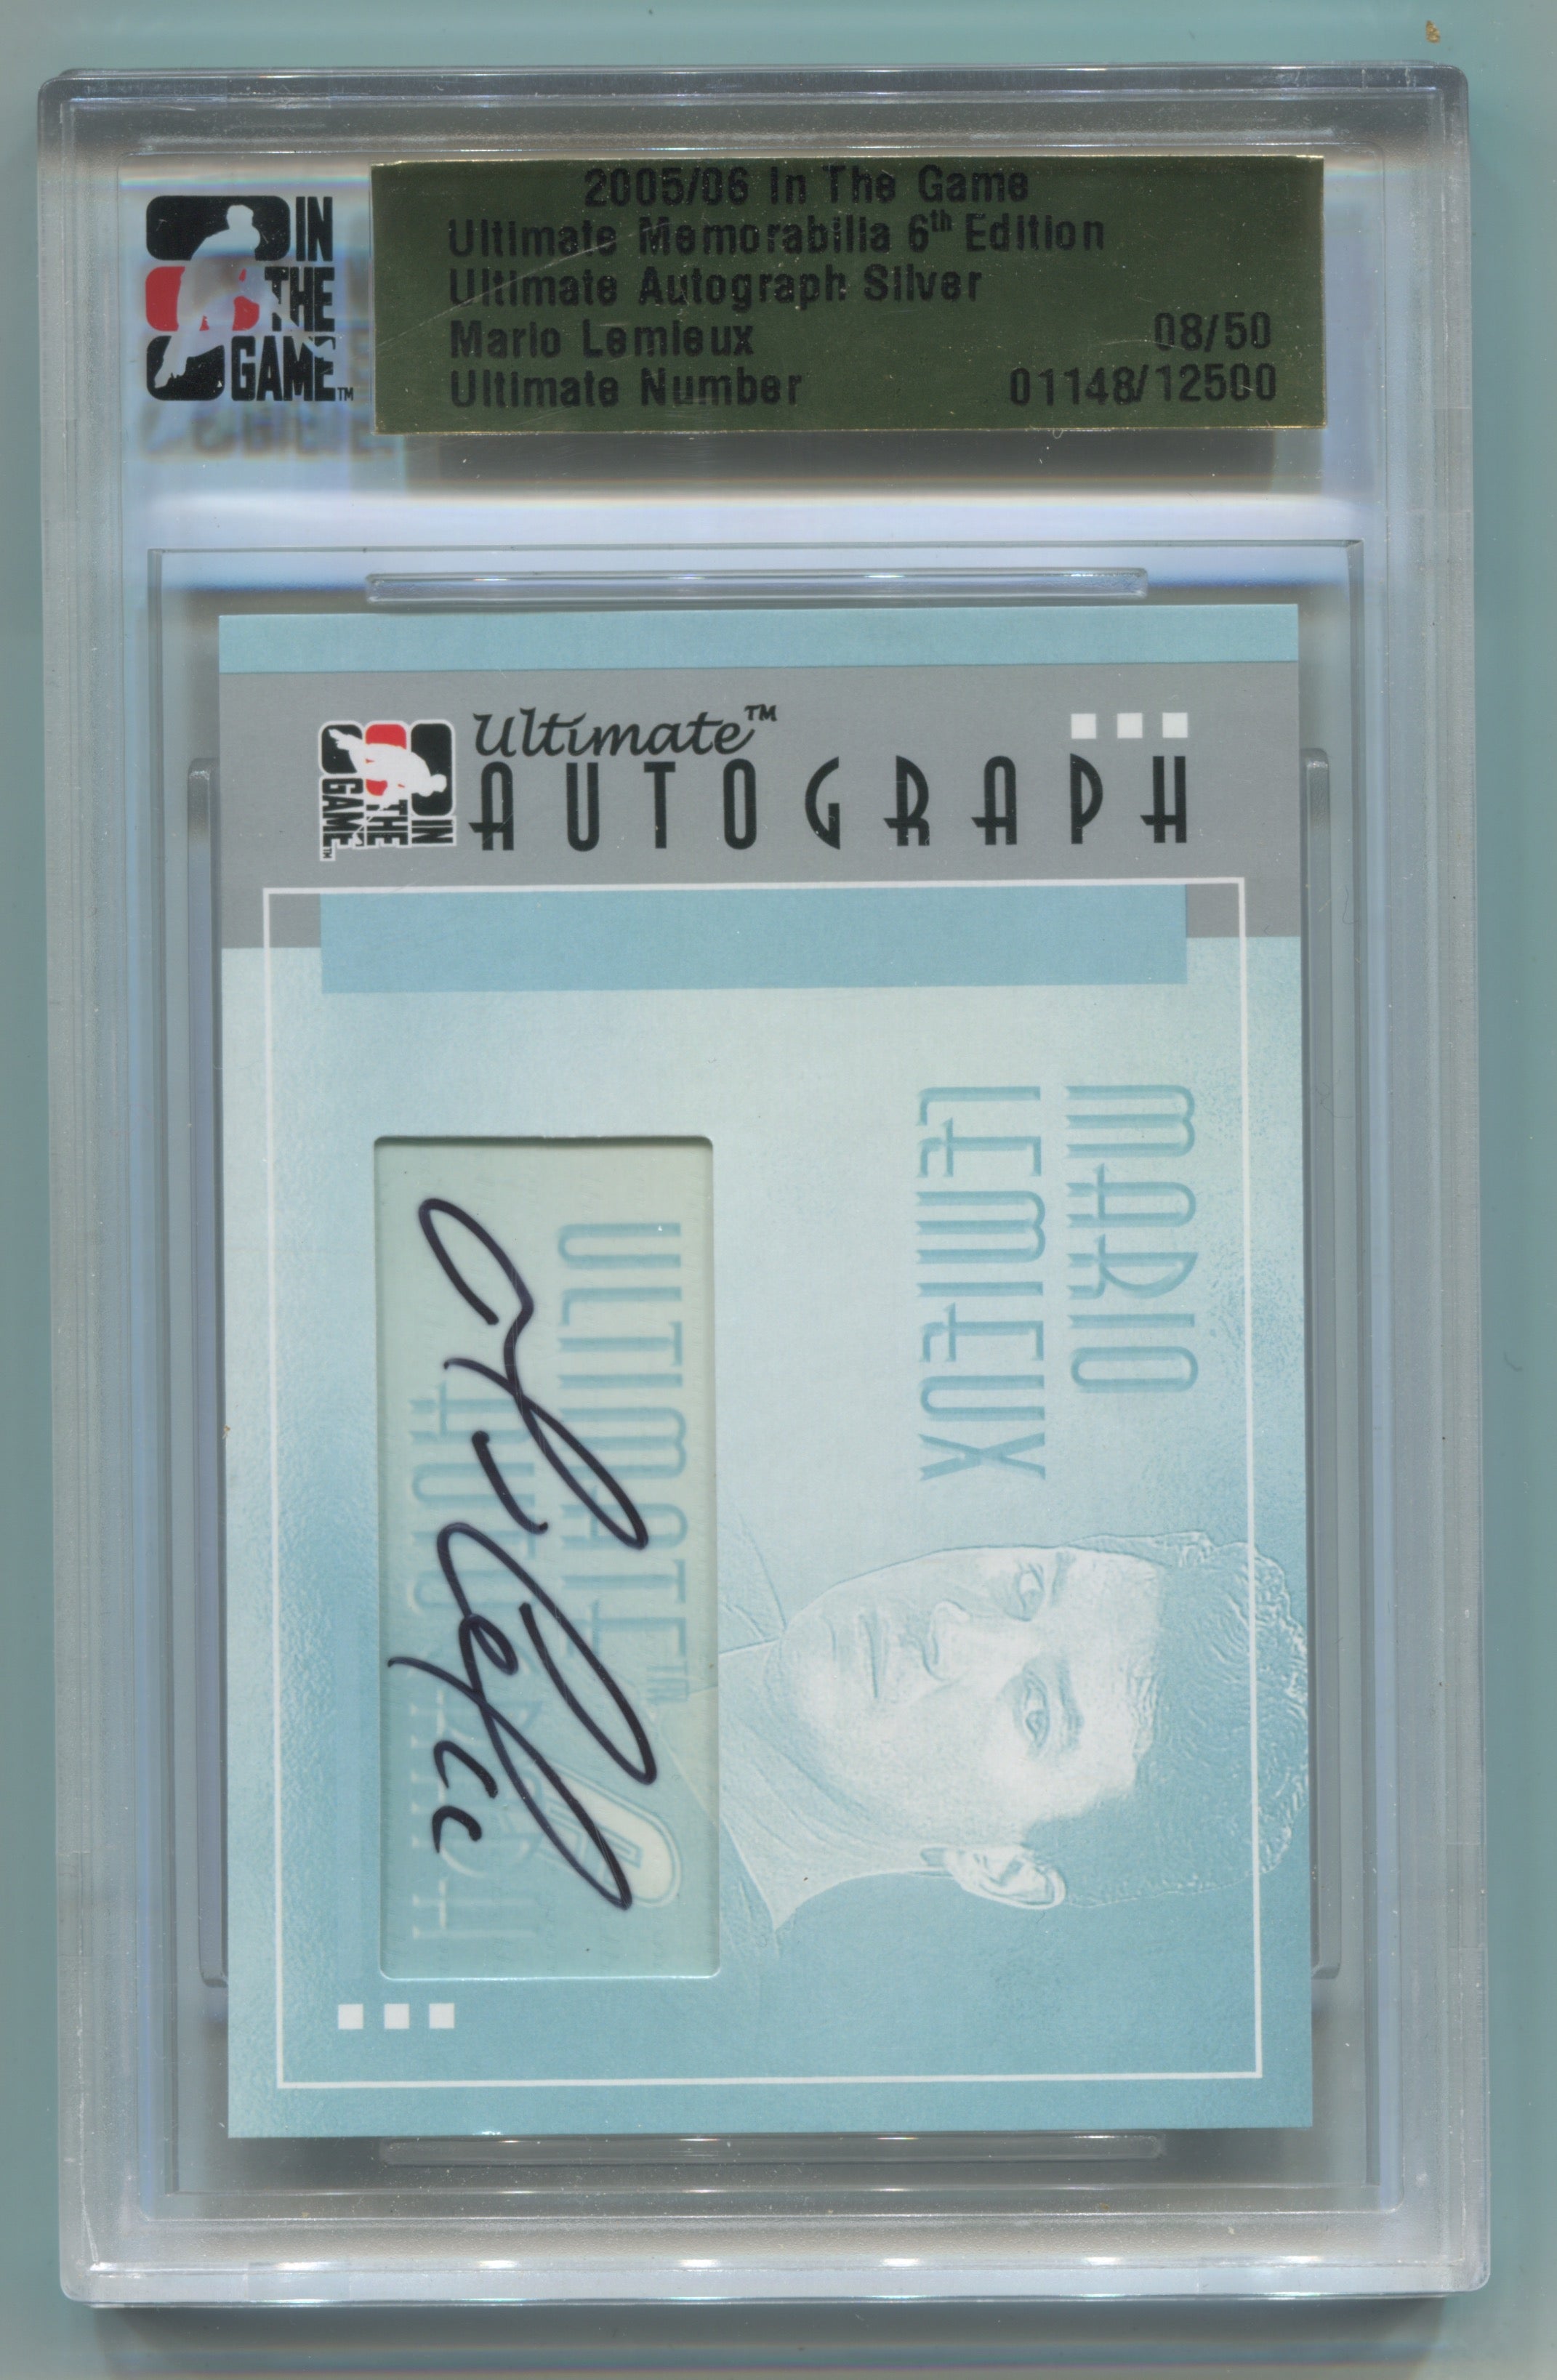 2005-06 ITG Ultimate Memorabilia Ultimate Autograph Silver Mario Lemieux #08/50 | Eastridge Sports Cards